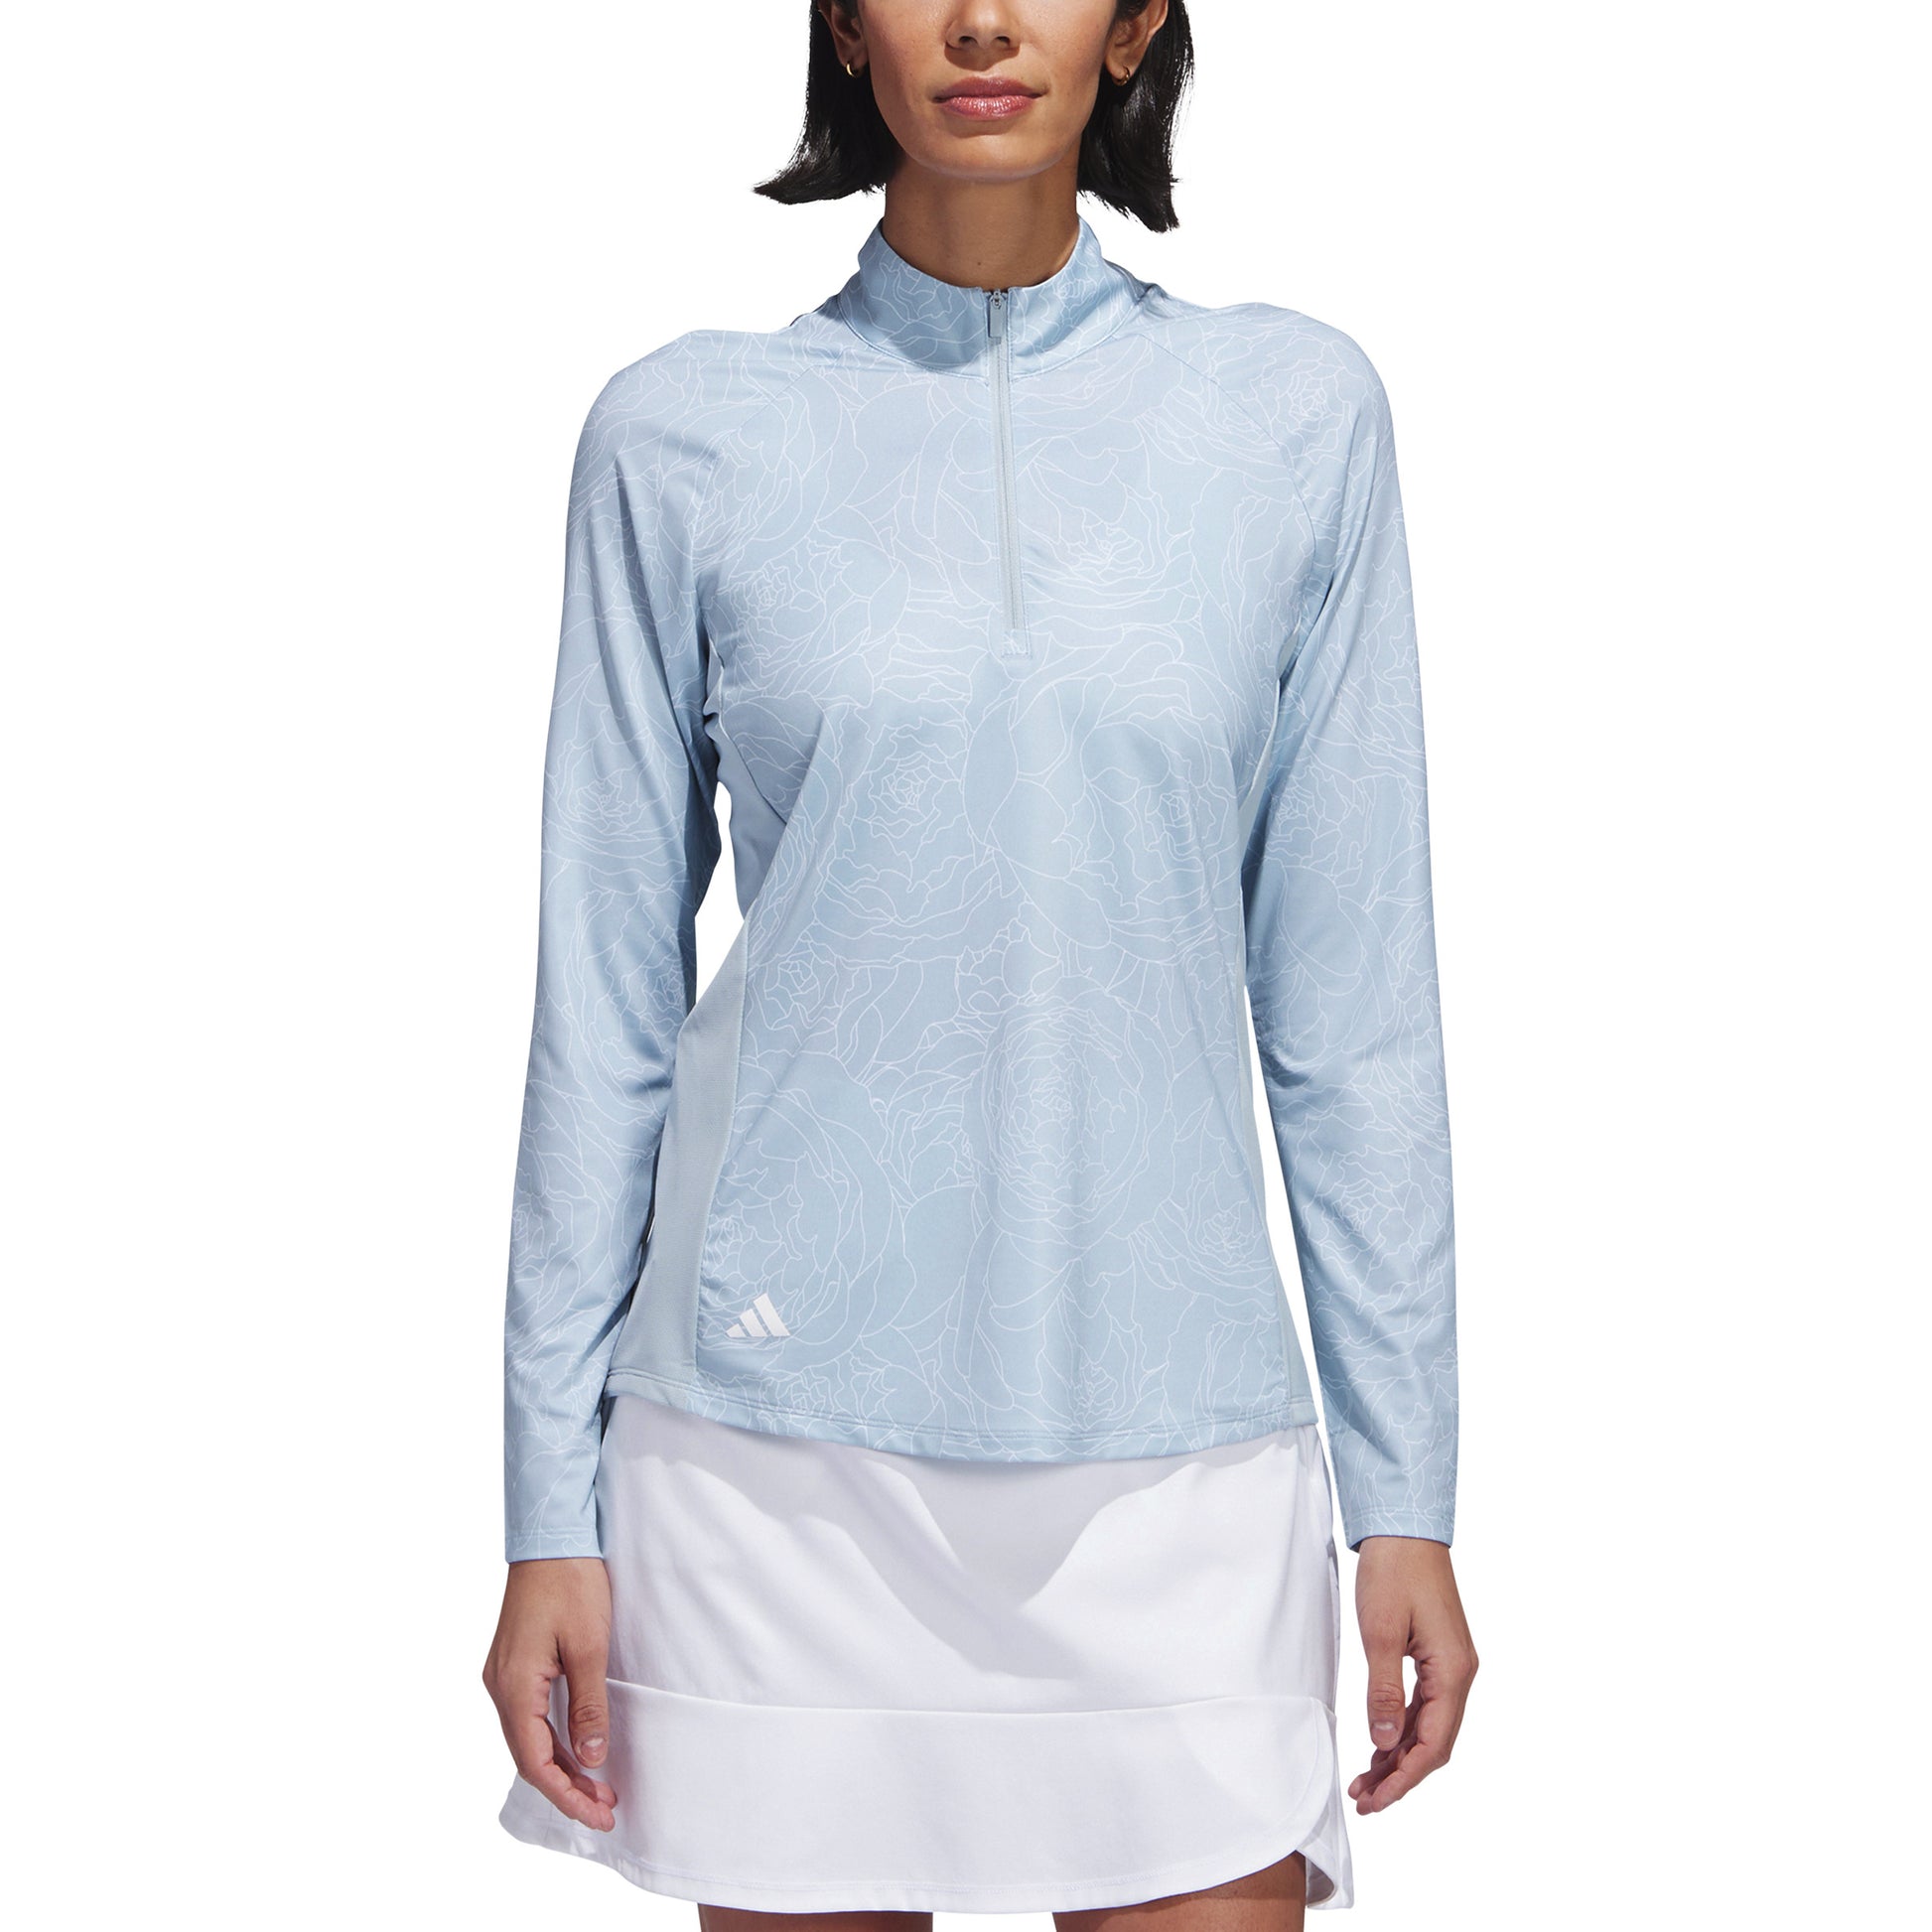 adidas Ladies Long Sleeve Printed Golf Polo in Wonder Blue - Medium Only Left